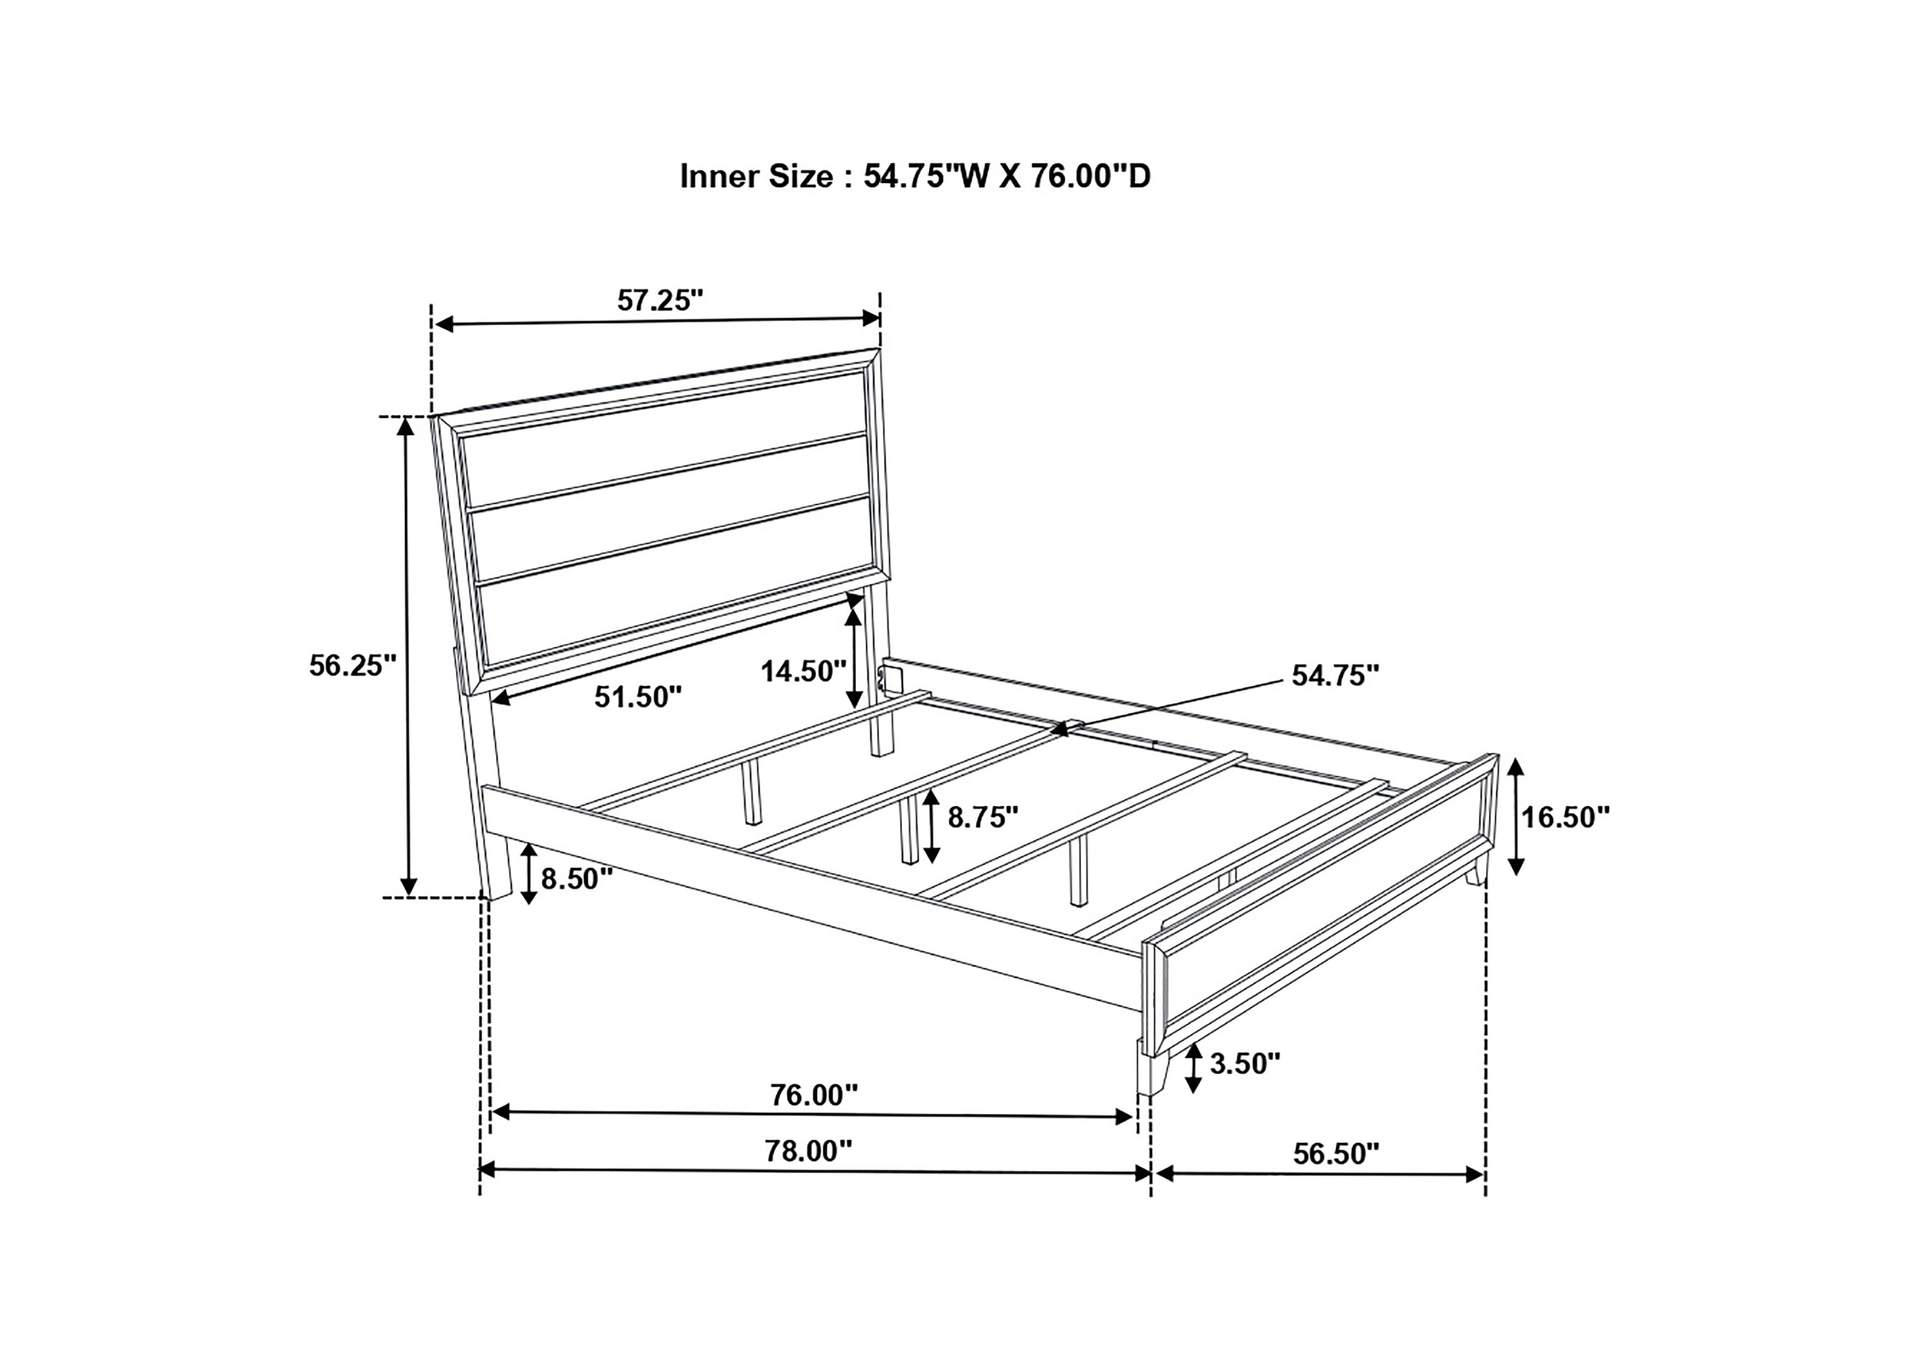 Watson Full Panel Bed Grey Oak,Coaster Furniture